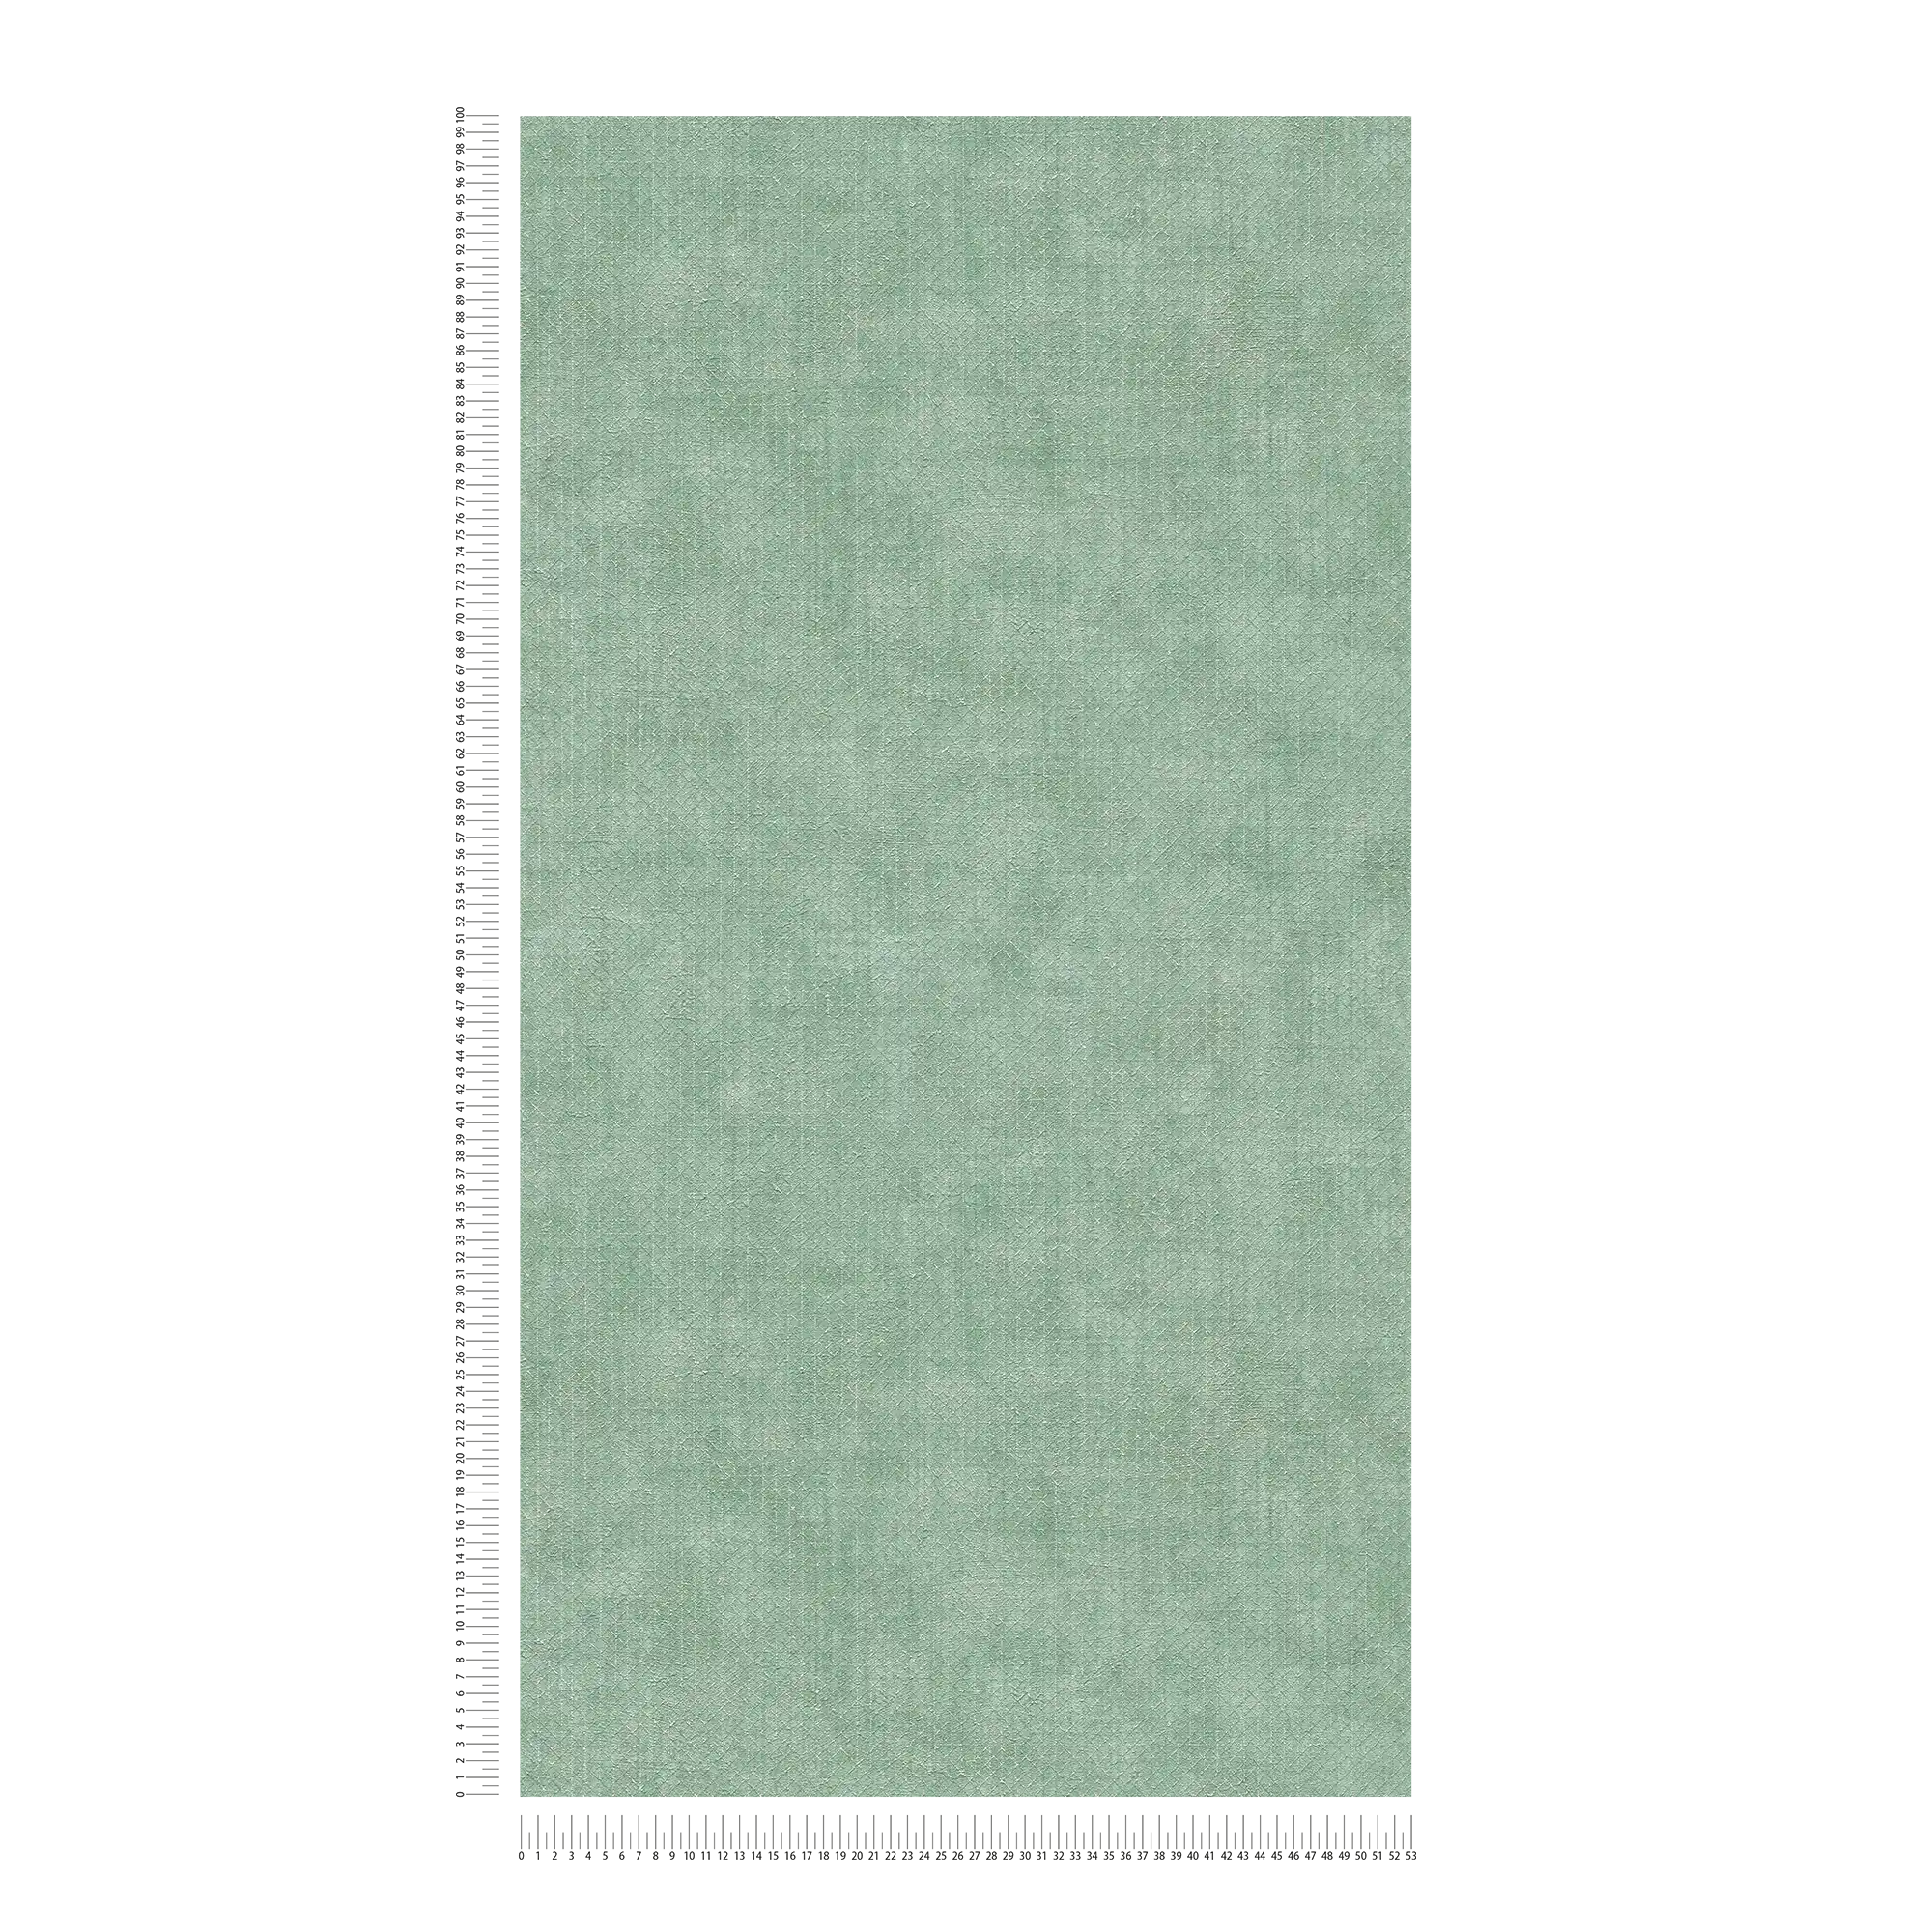             Carta da parati verde menta con motivo a trama argentata - metallizzata, verde
        